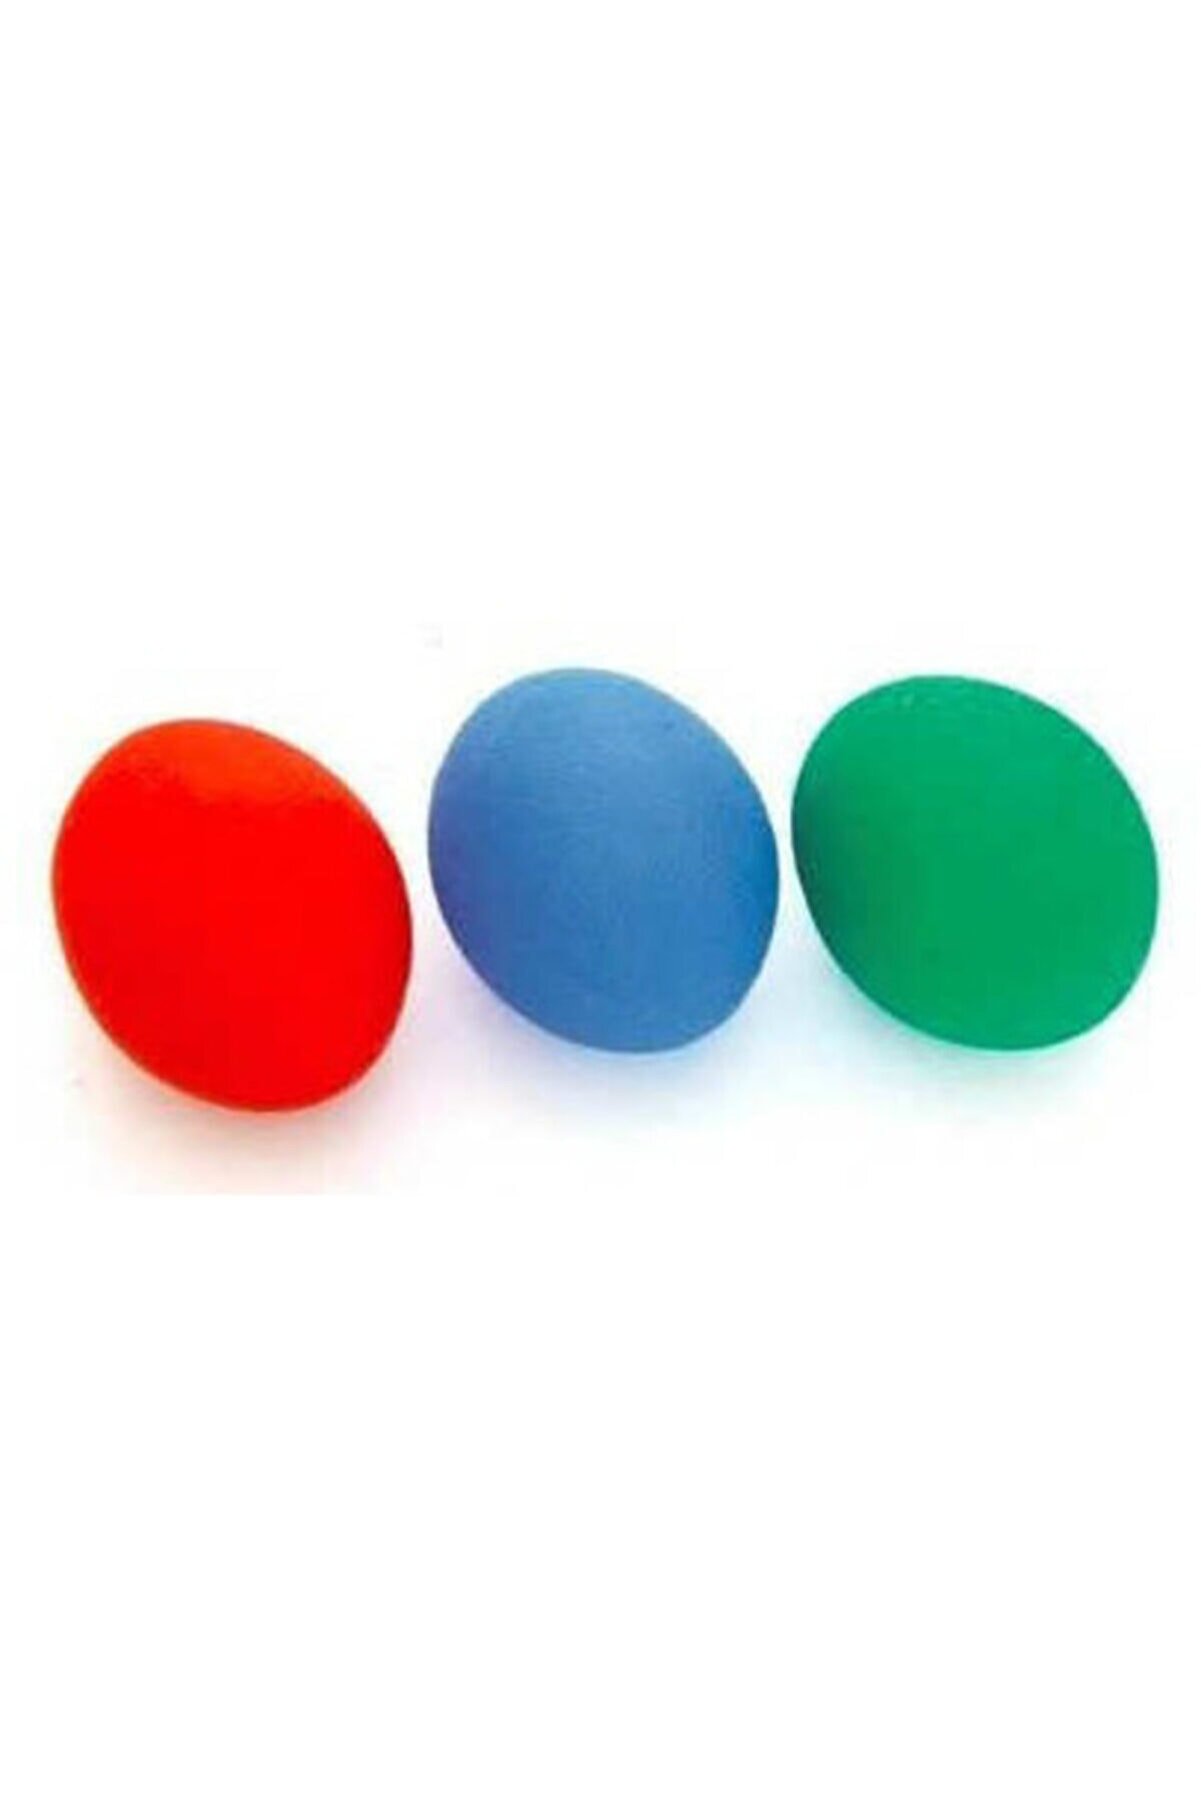 silimo Kırmızı Renk (sert) Silikon Stres Topu El Egzersiz Topu Fizik Tedavi Topu